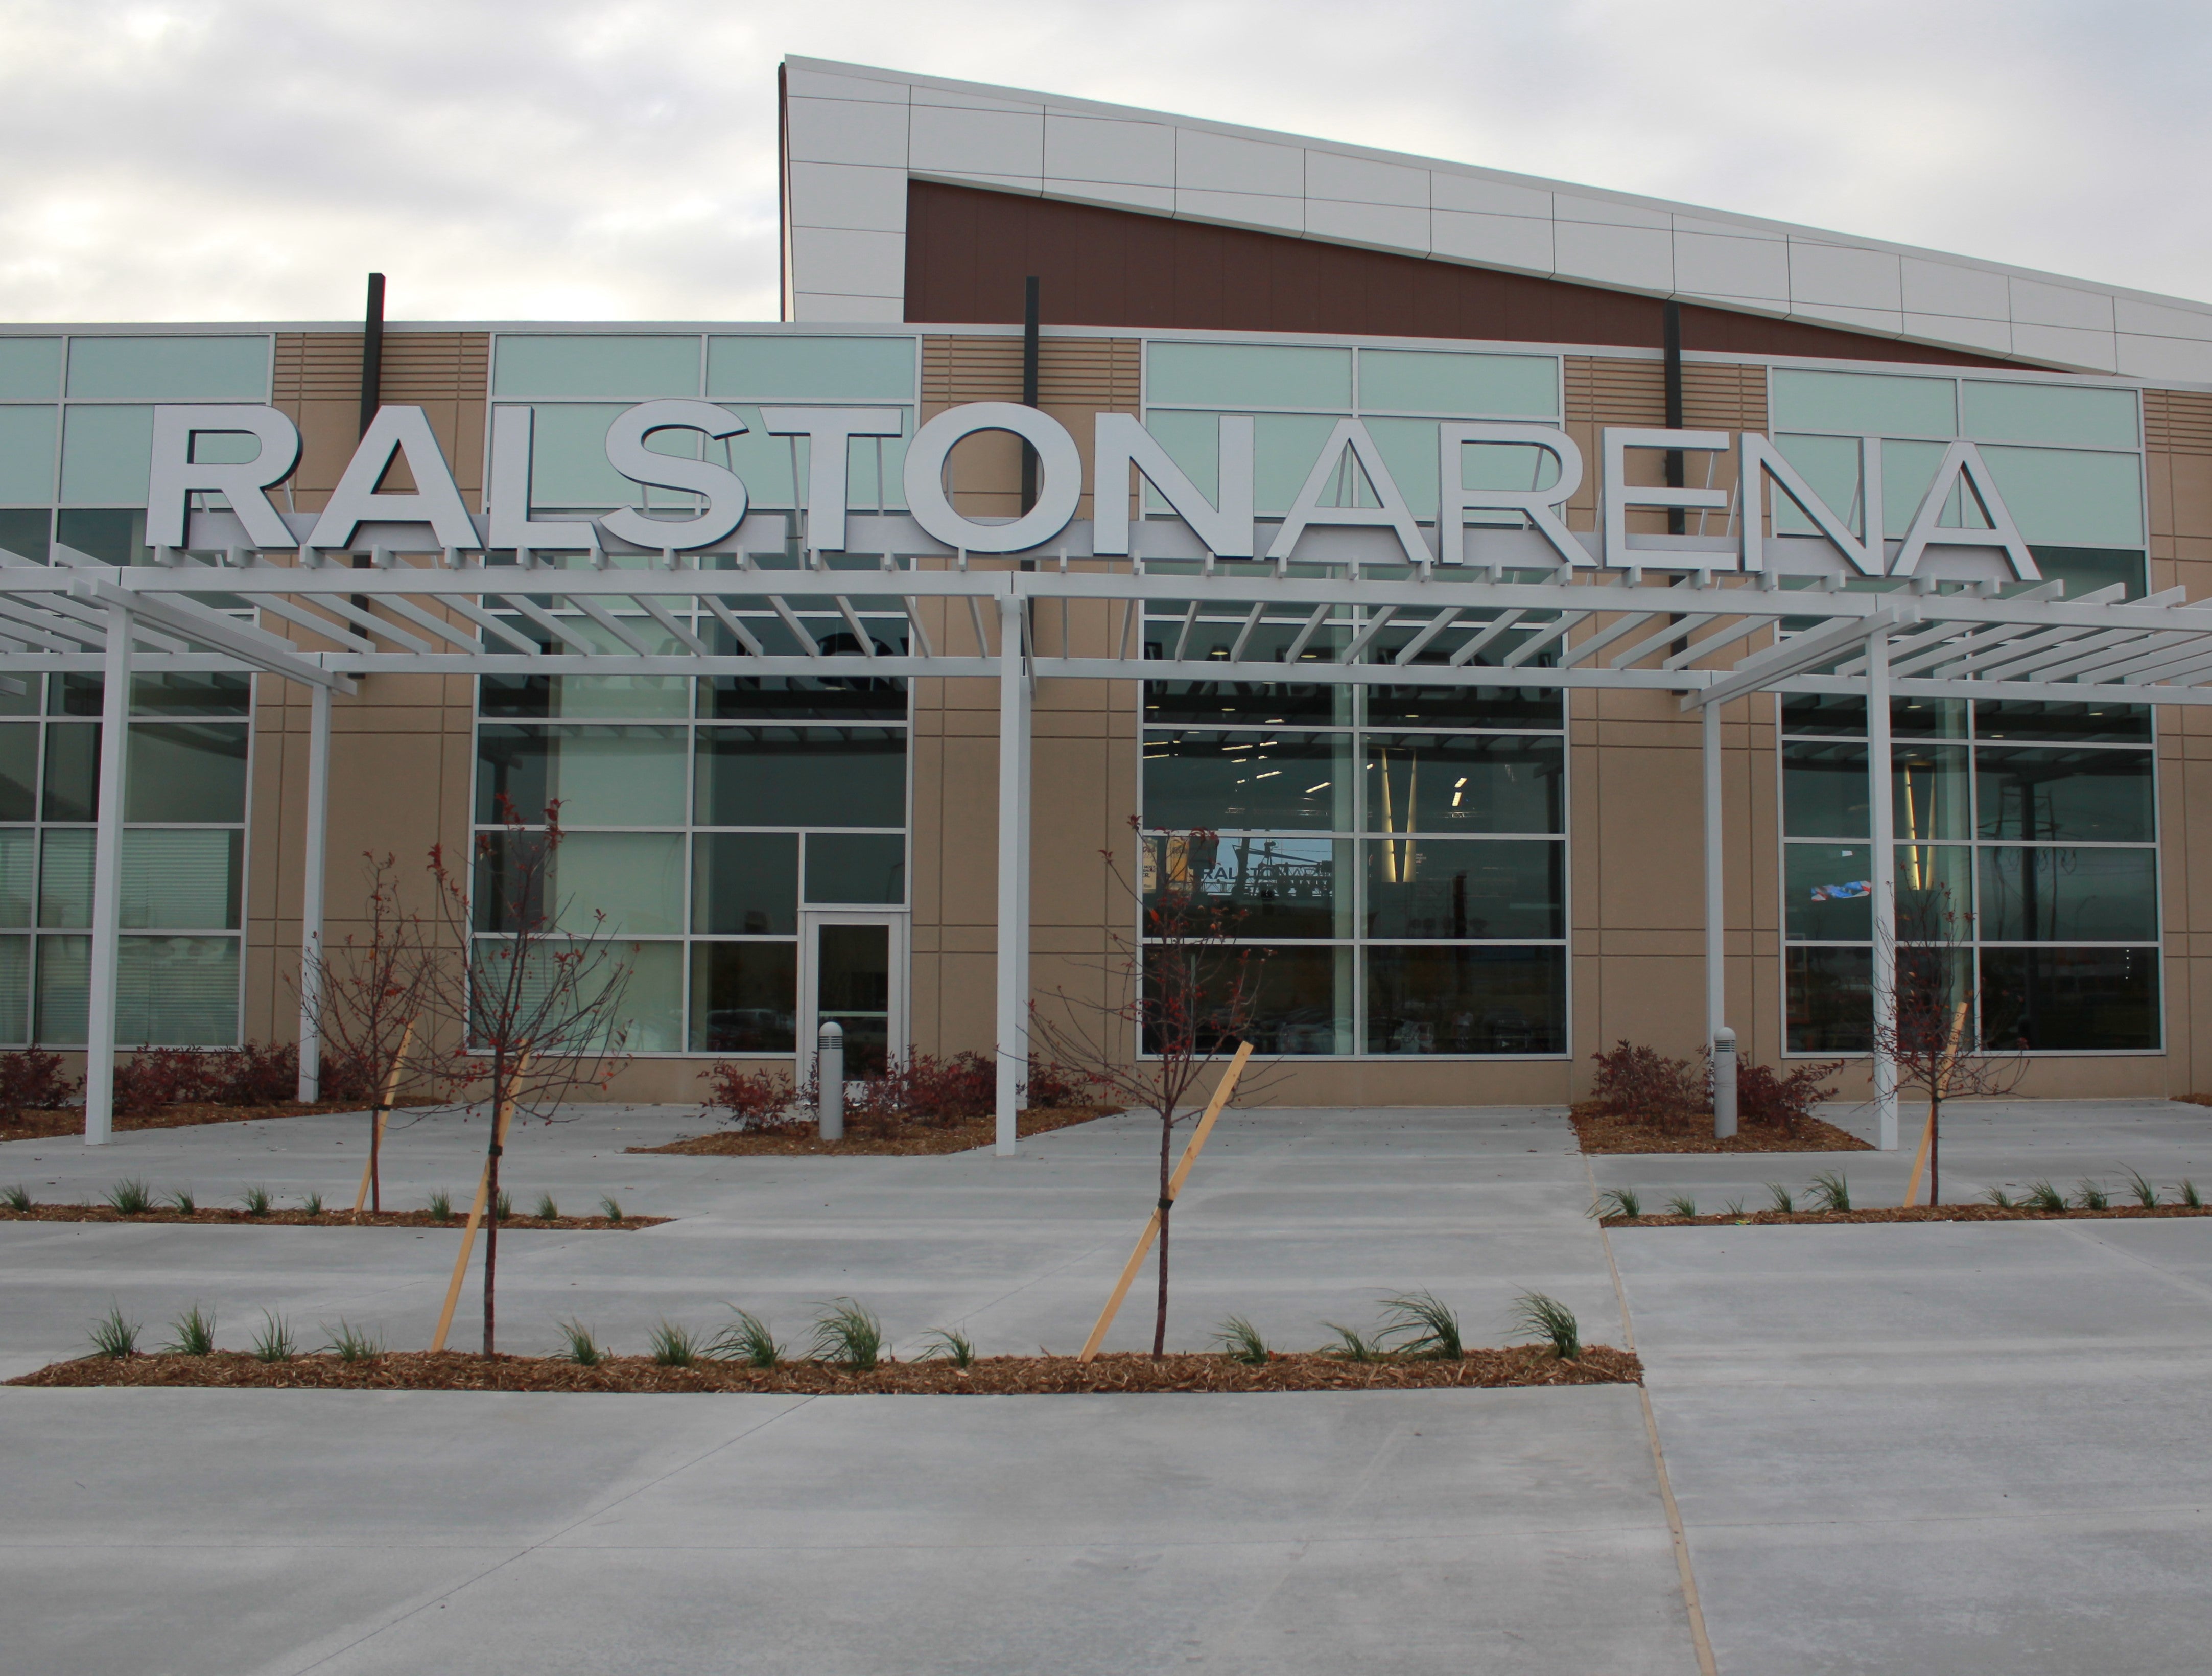 Ralston Arena 2022 show schedule & venue information Live Nation